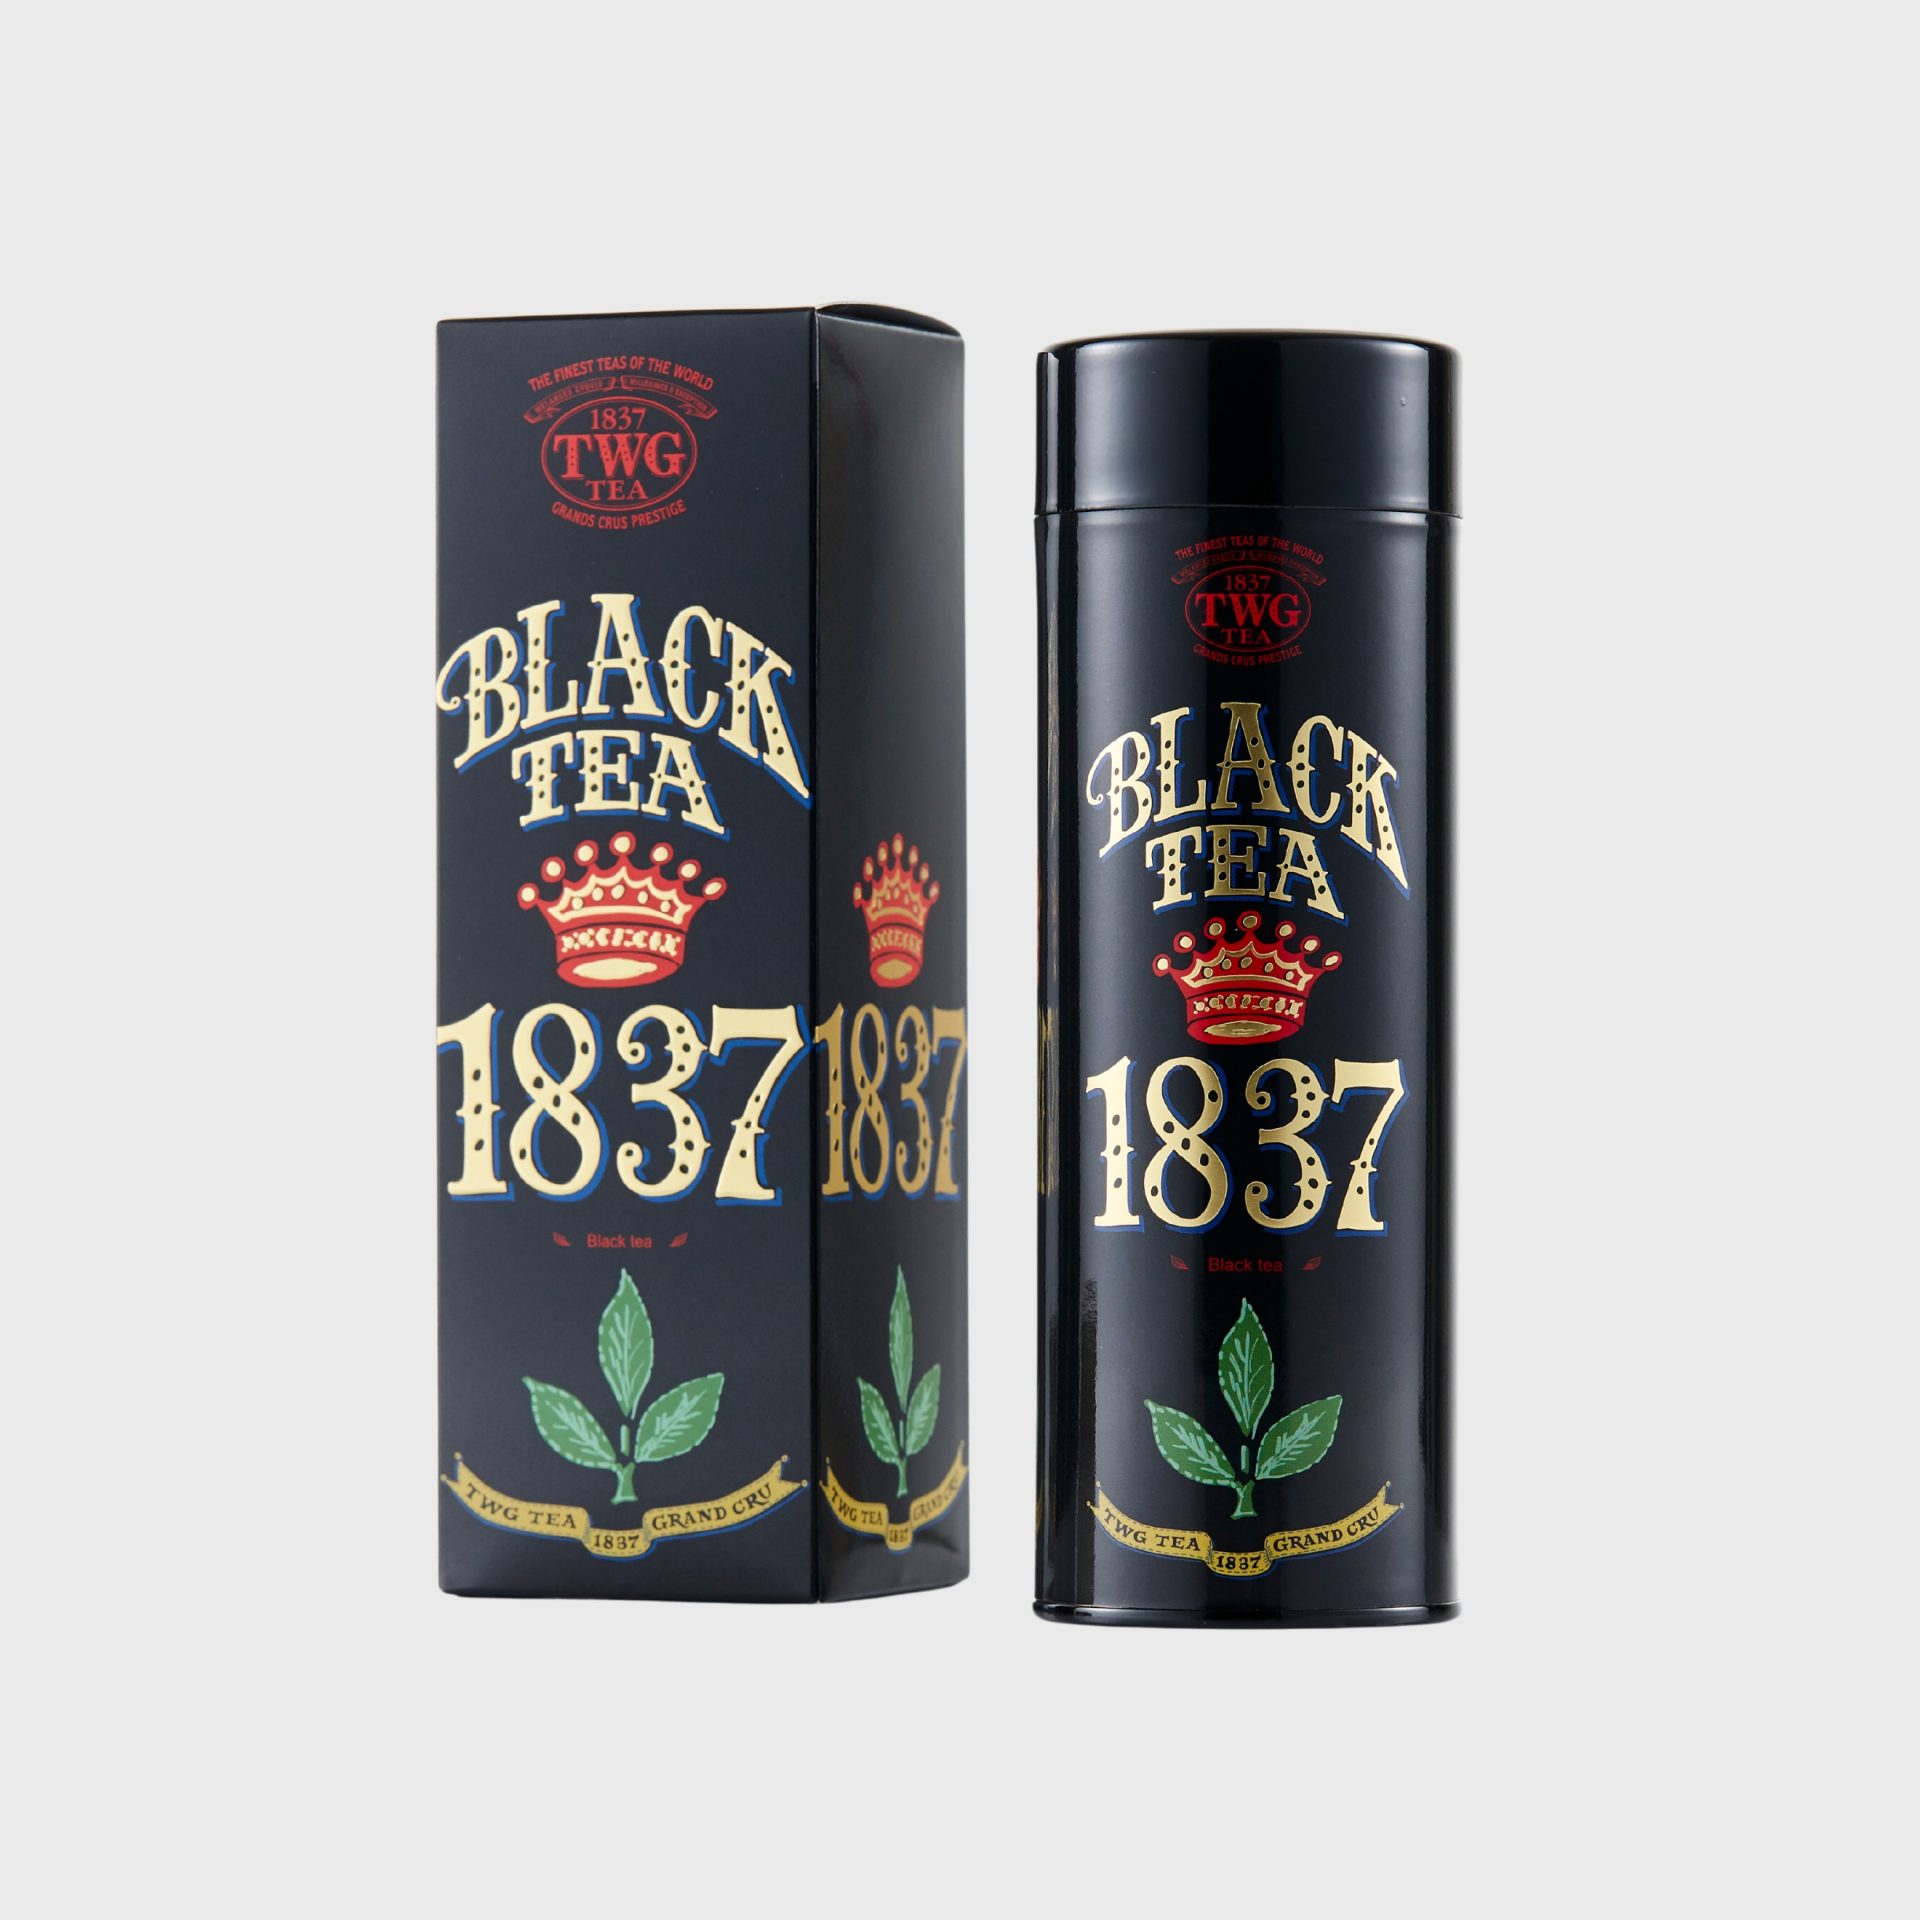 TWG Tea Corporate Gifts Singapore - 1837 Black Tea